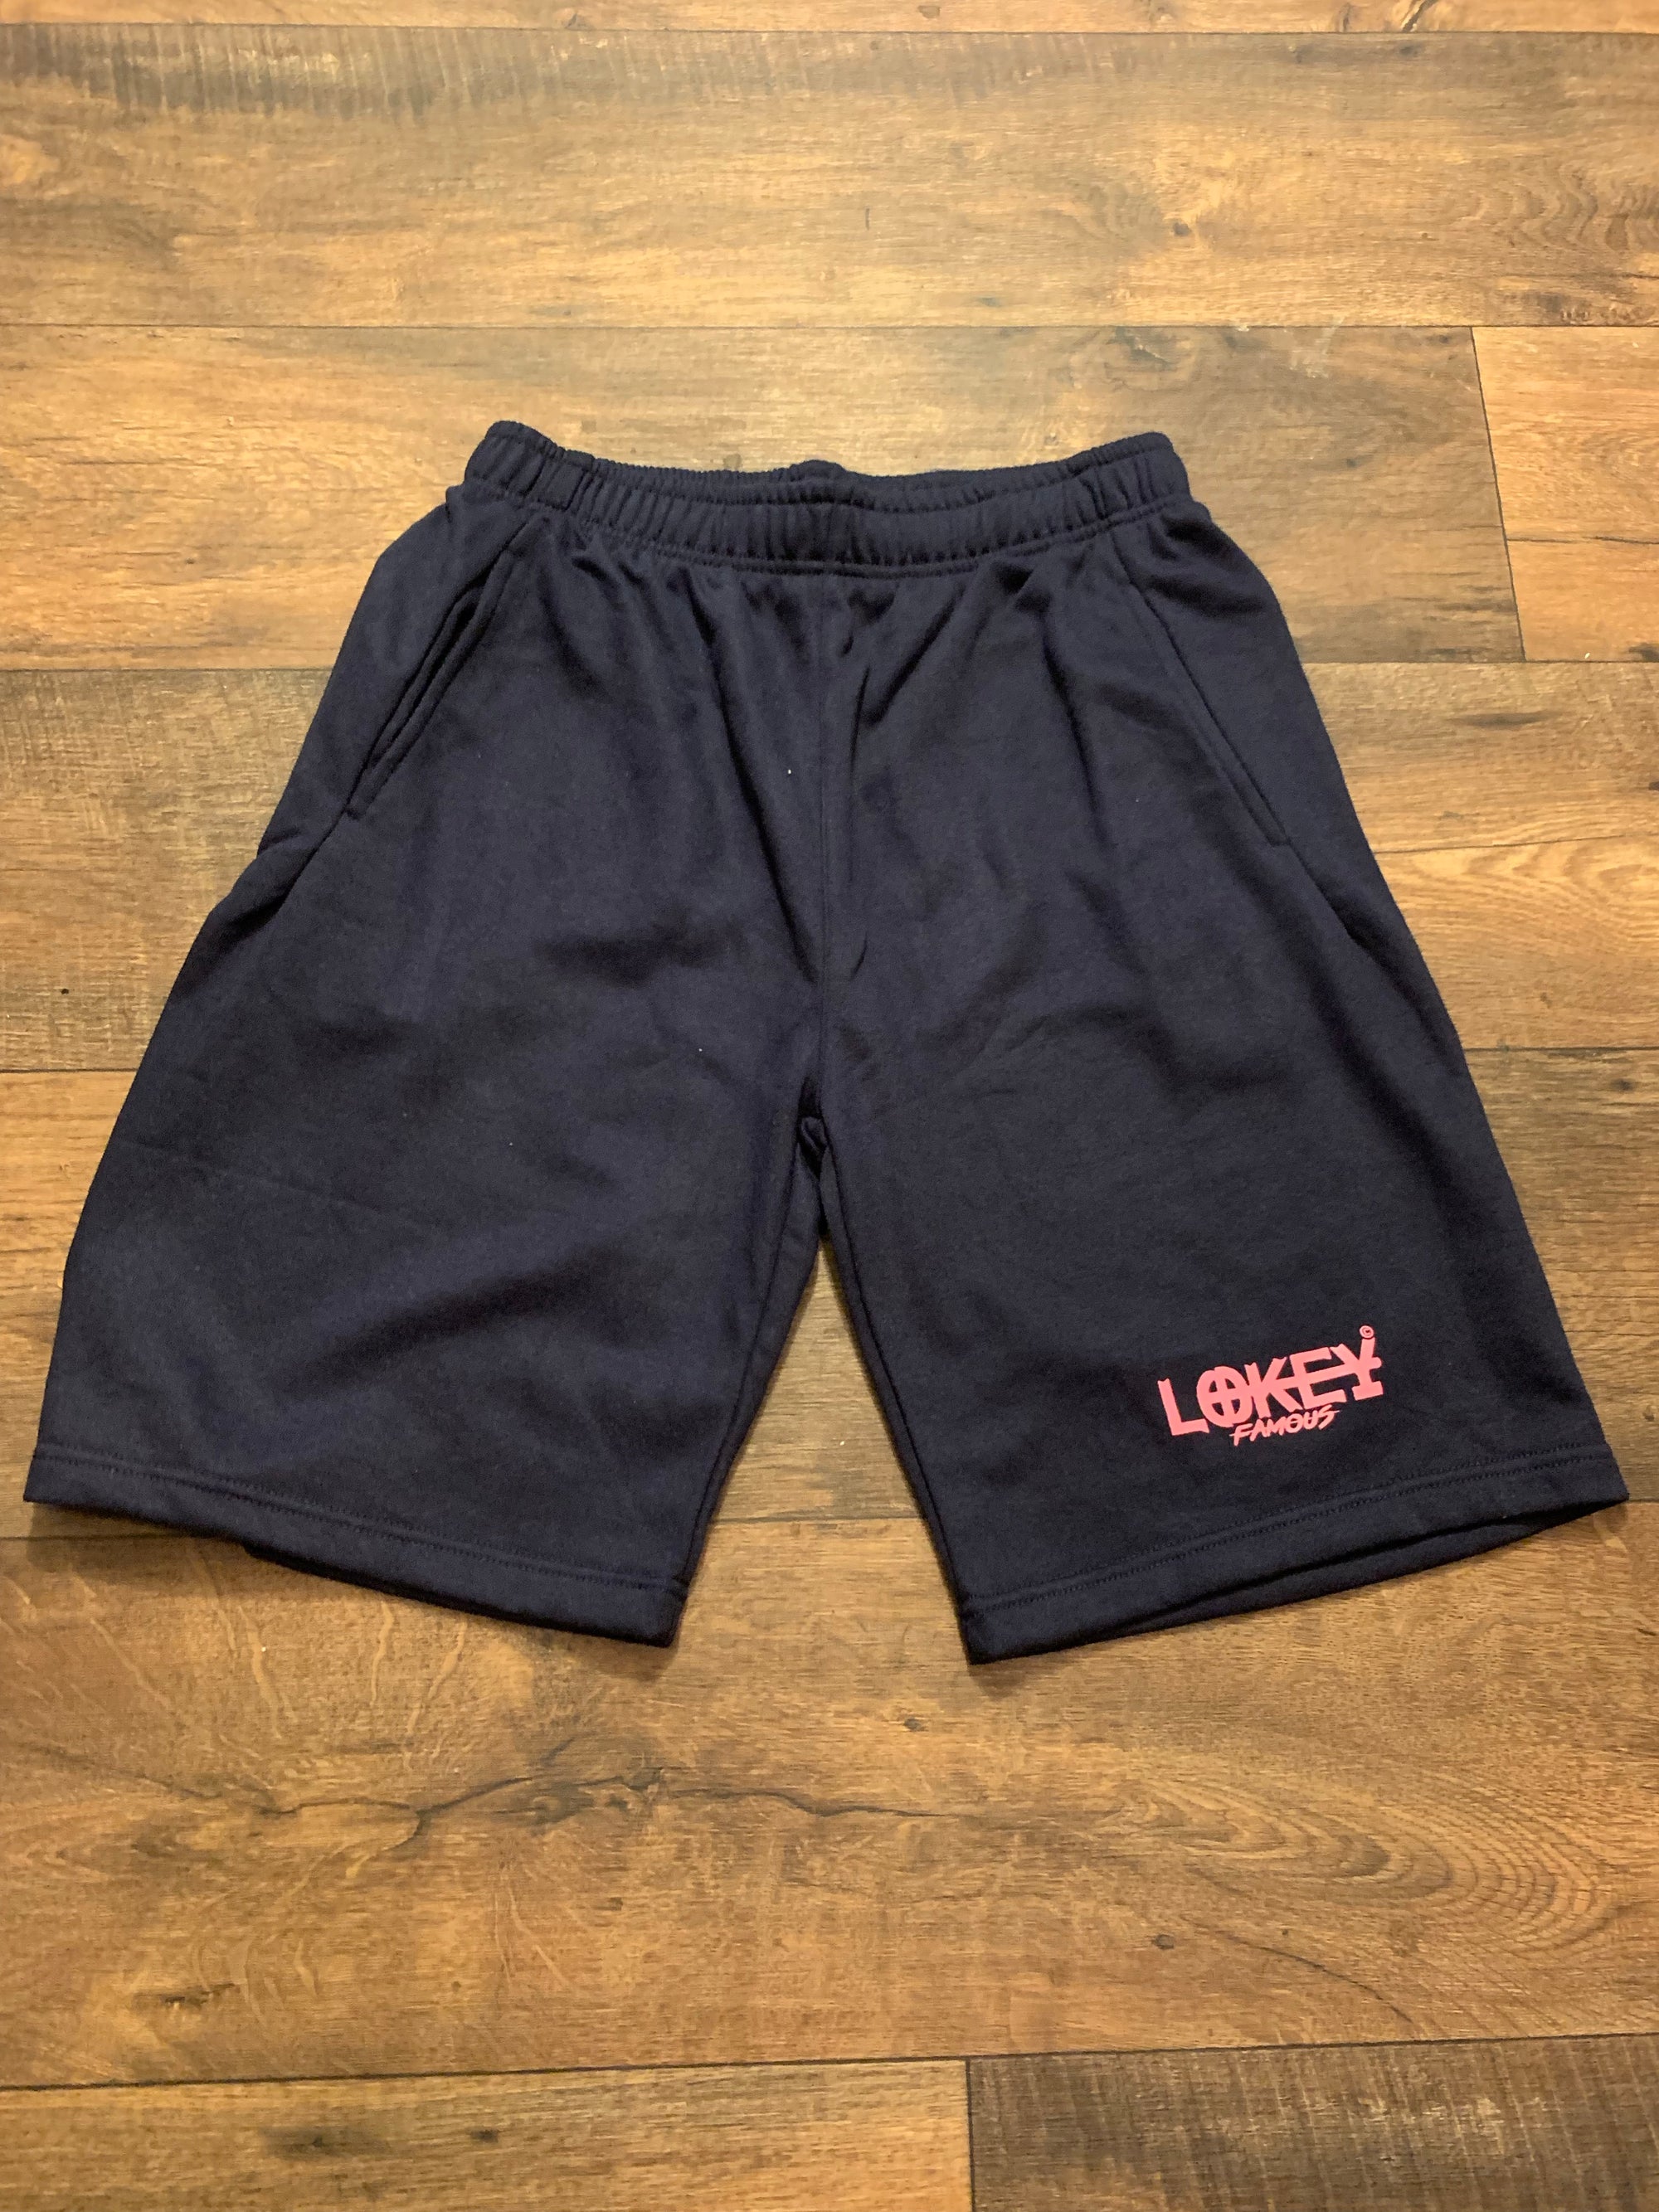 LF shorts (navy blue)